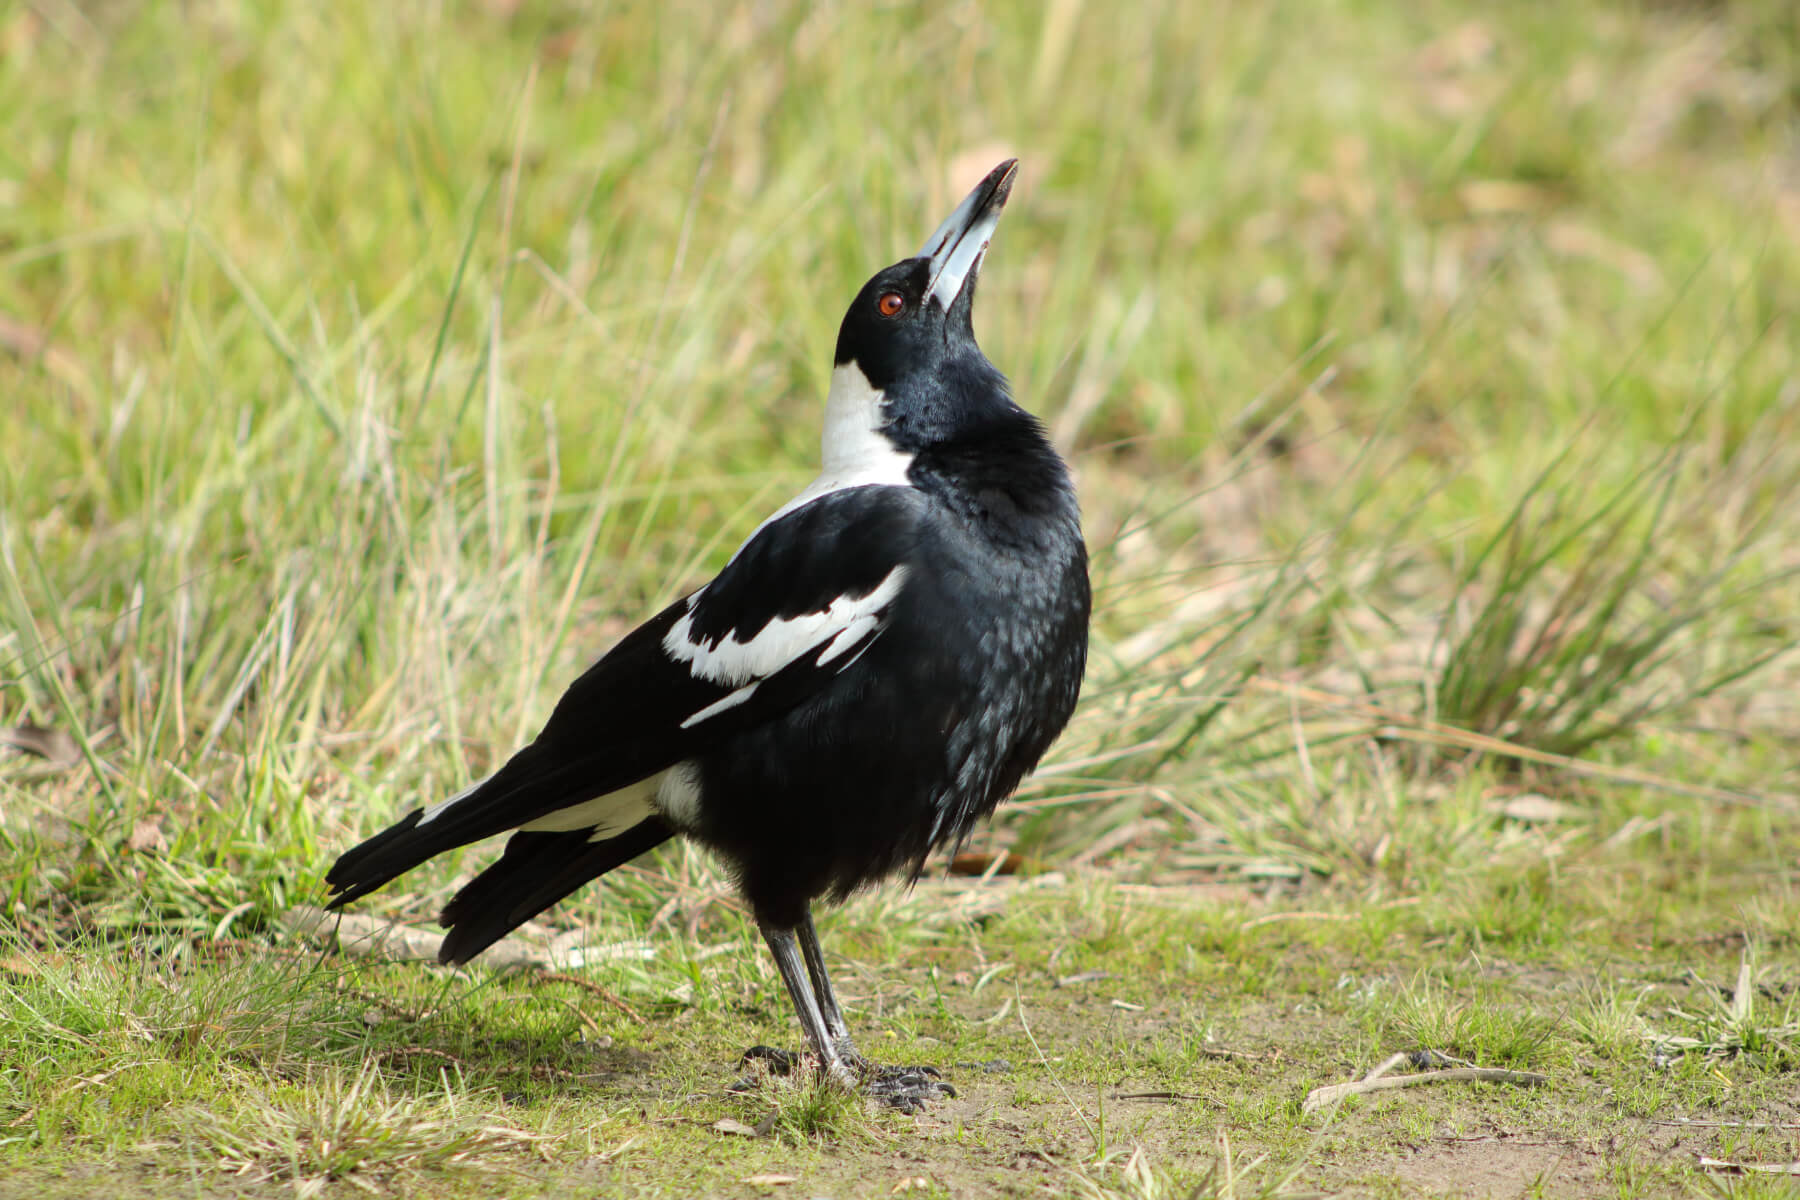 Australian Magpie Information - Habitat, Diet, Behaviour, and More